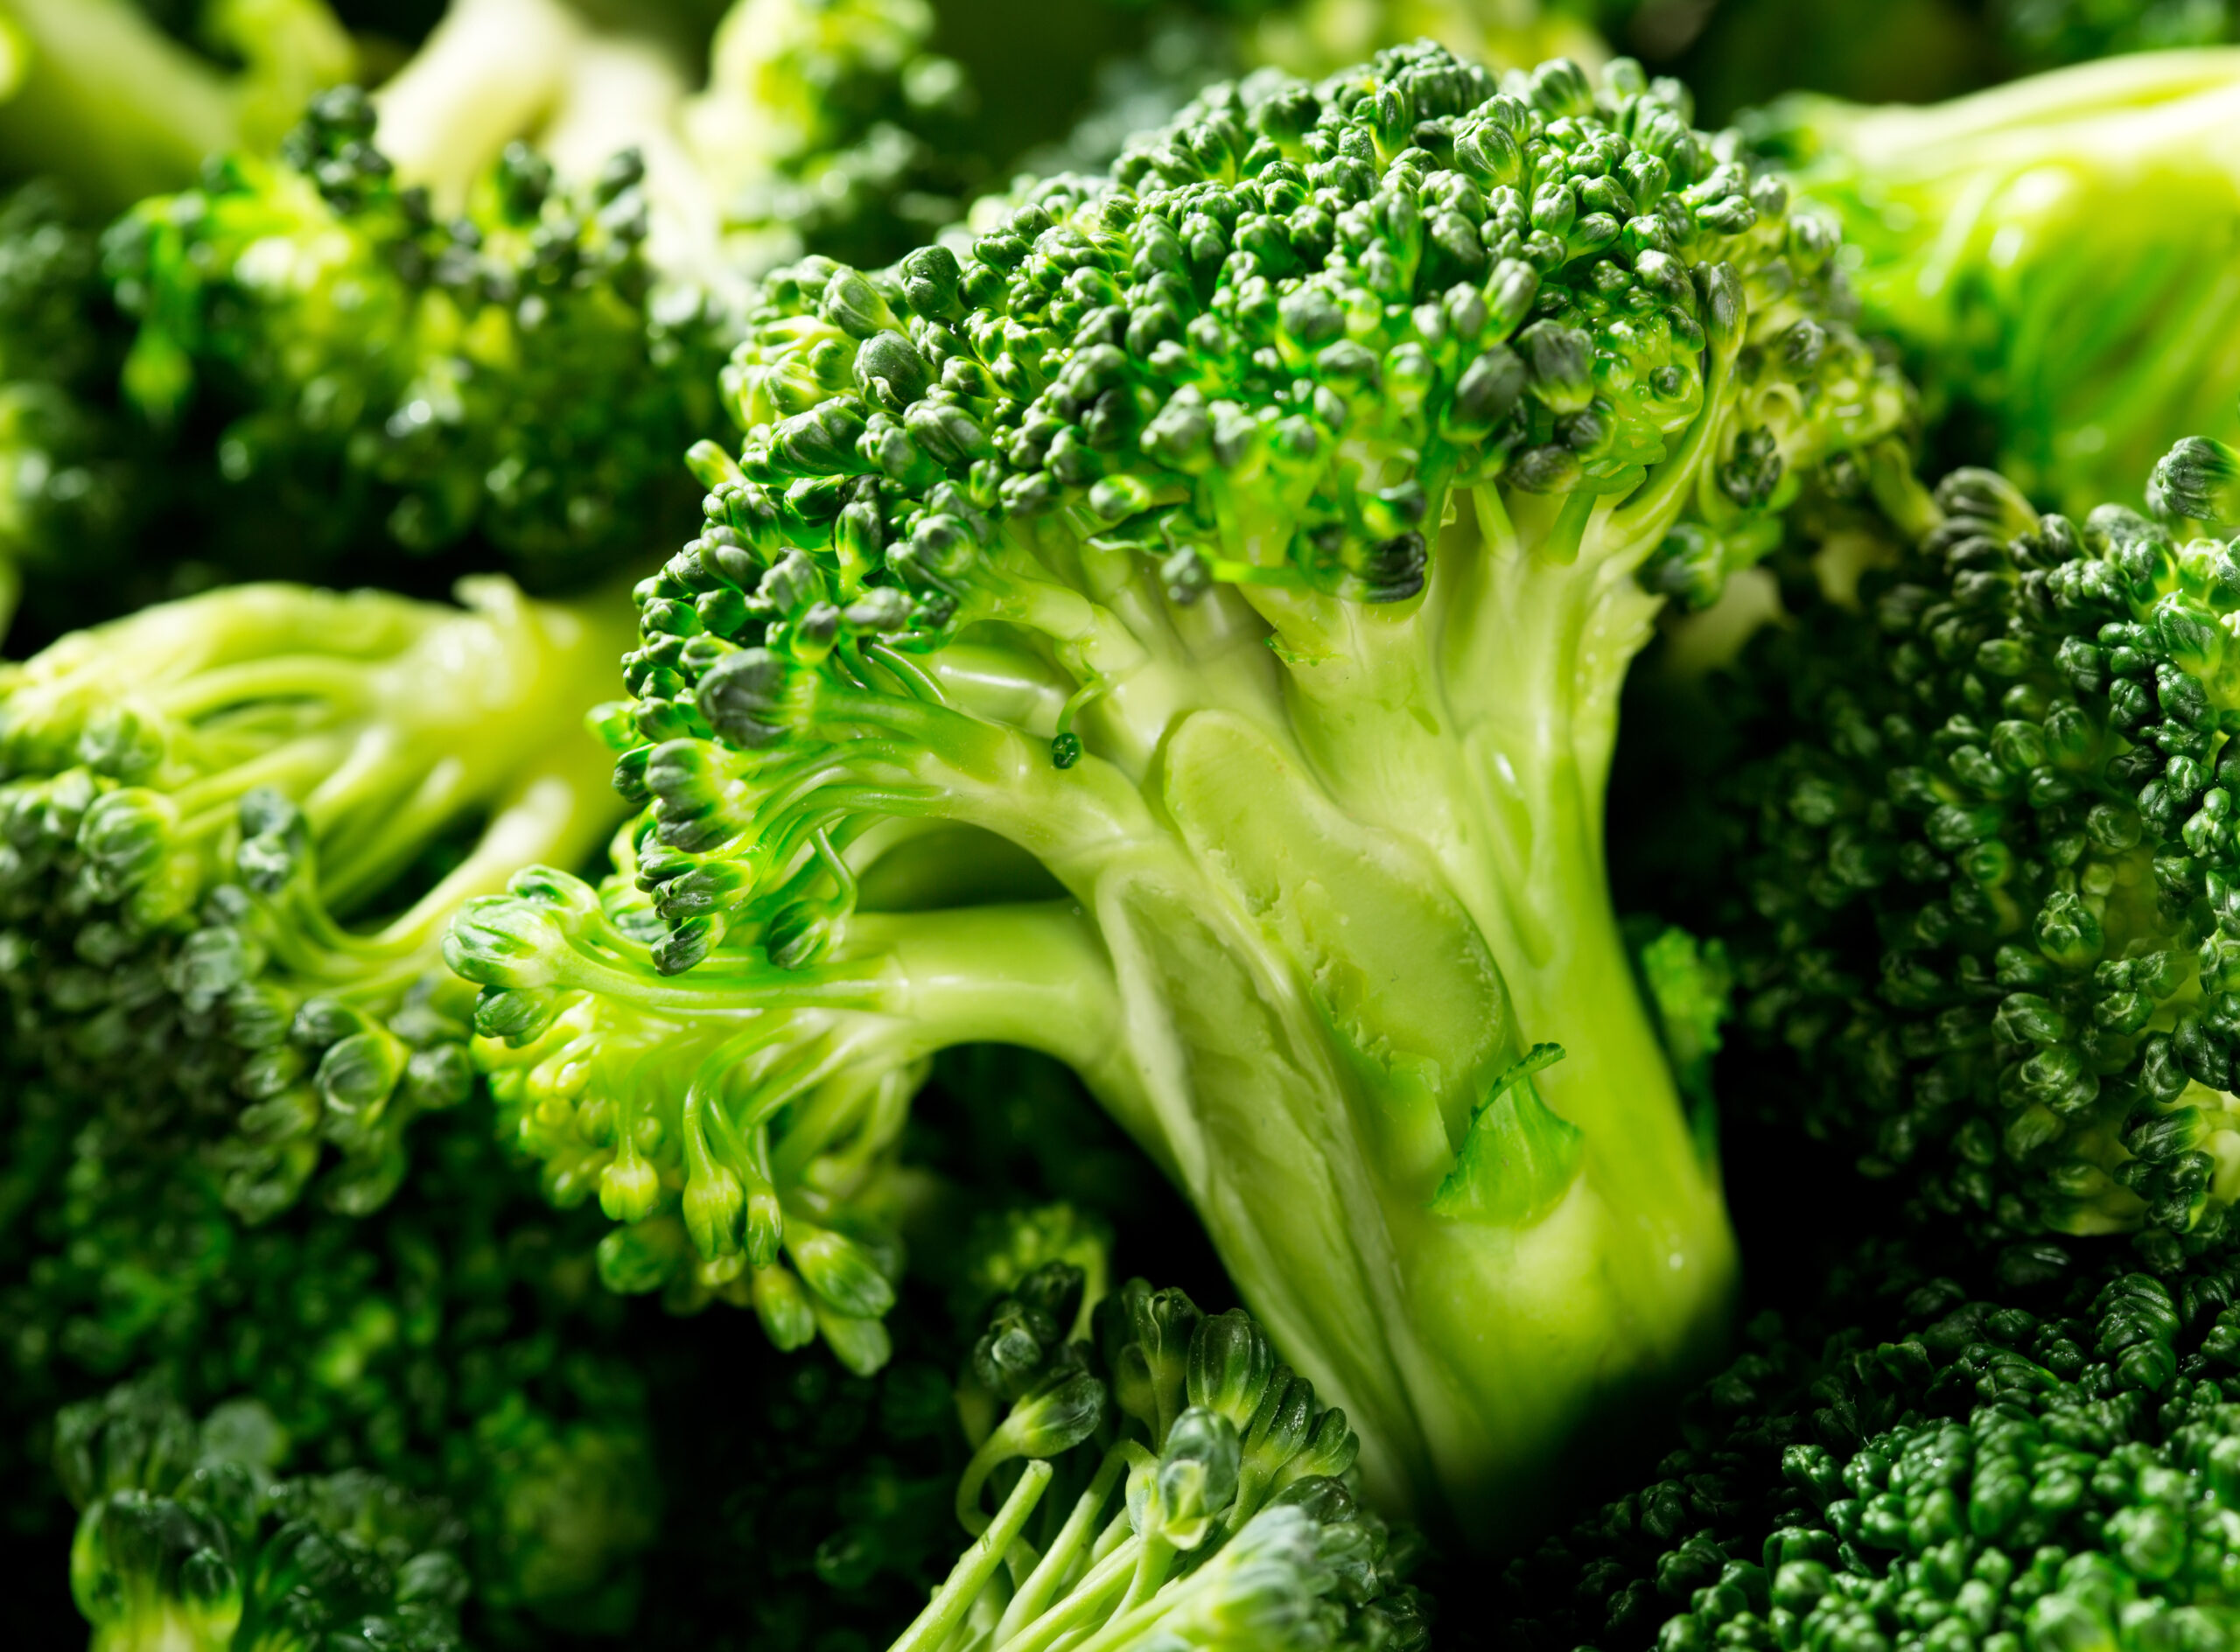 Can You Juice Broccoli